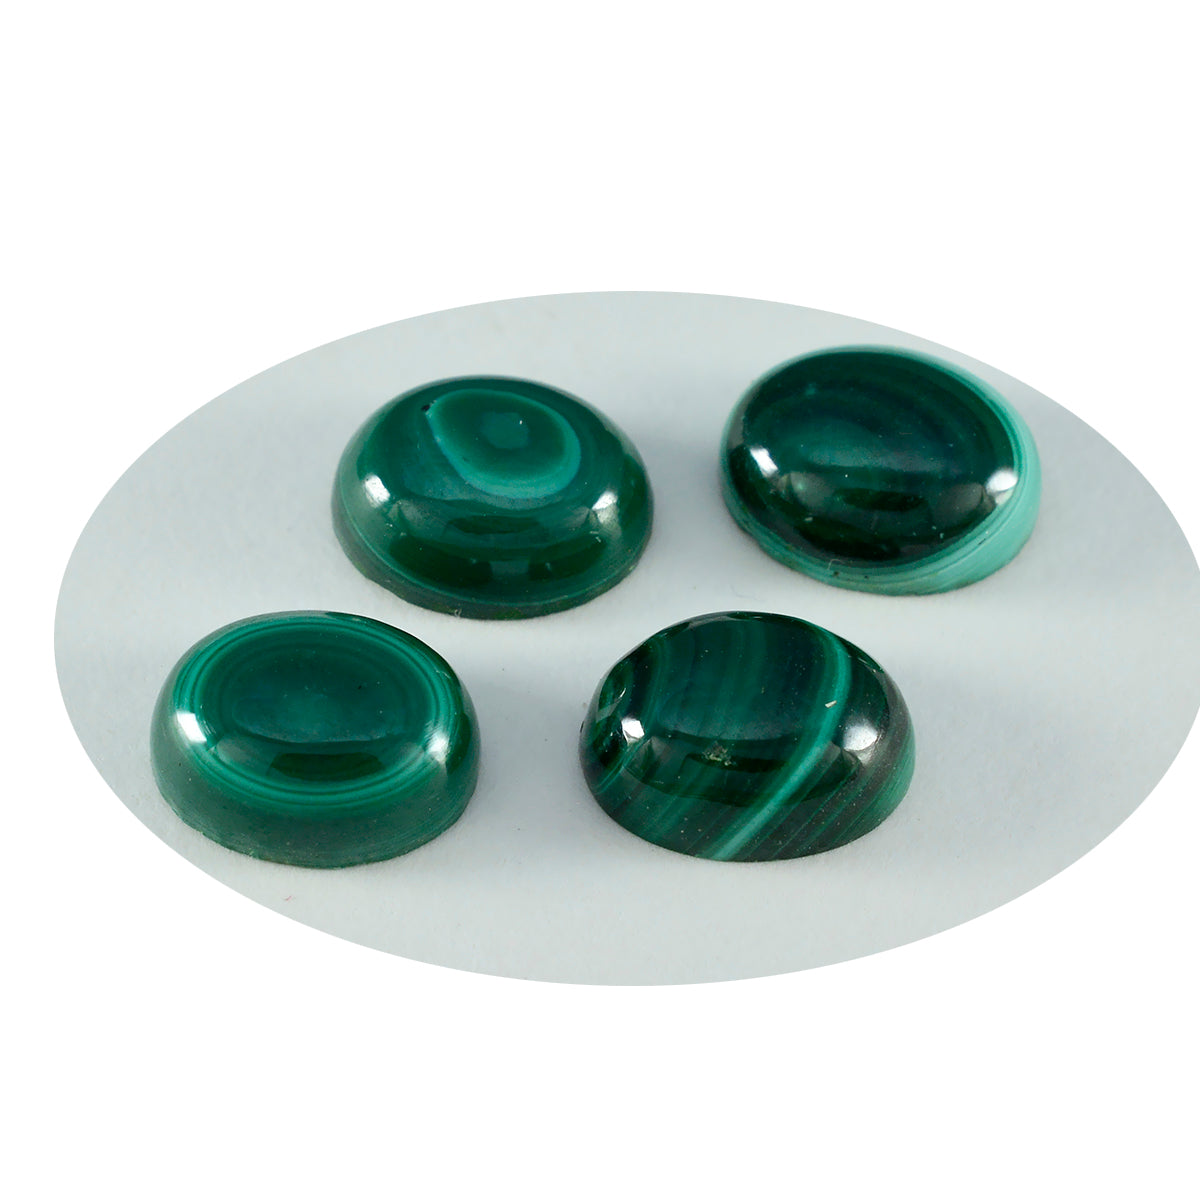 riyogems 1 st grön malakit cabochon 8x10 mm oval form fantastisk kvalitet lös pärla